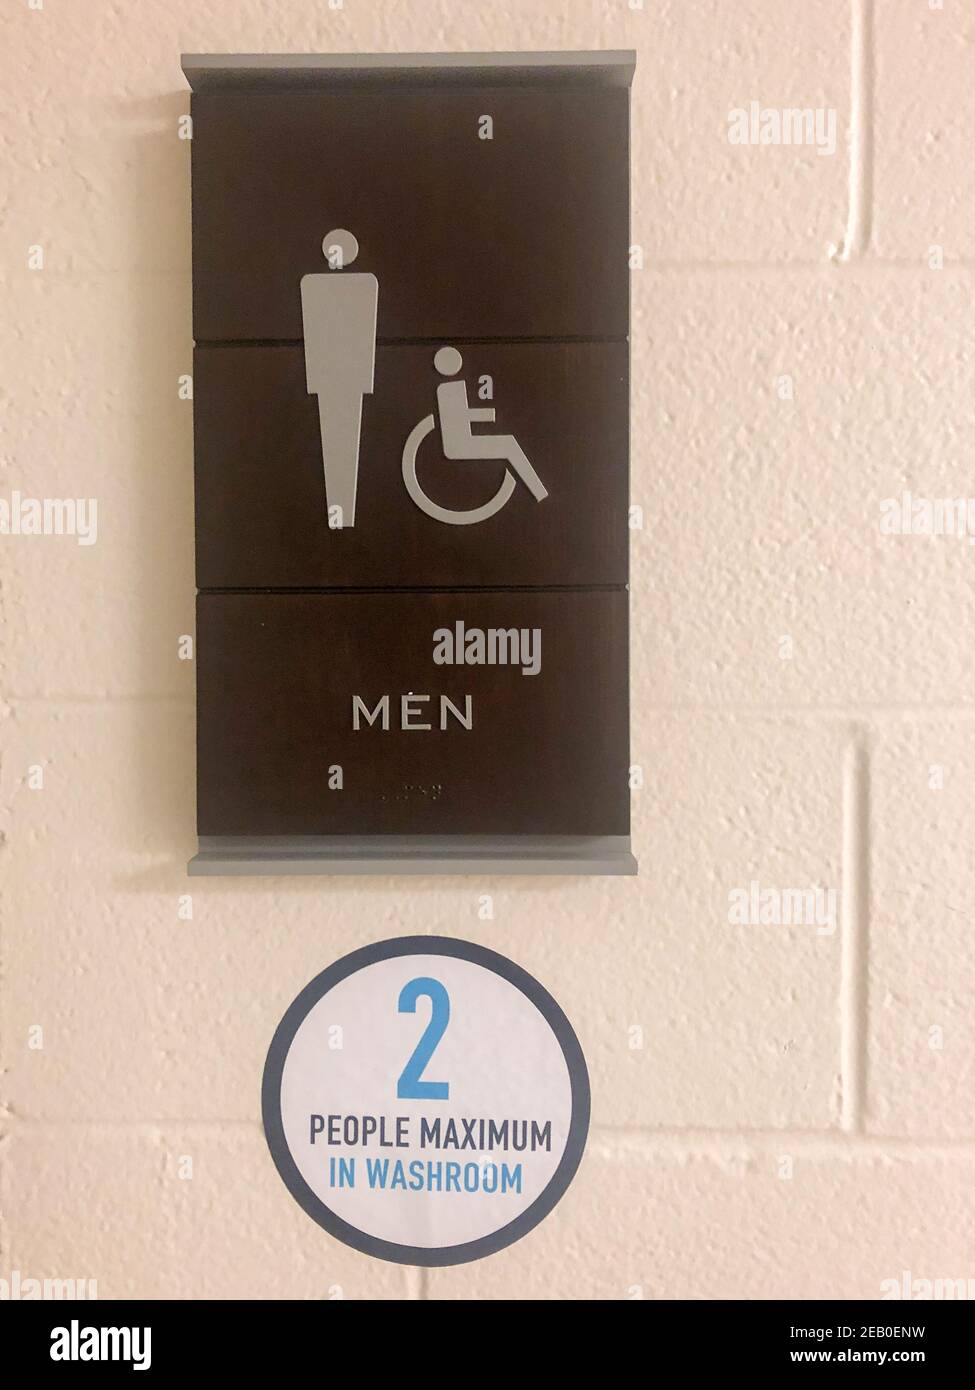 Sign regarding social distancing rules in public bathroom. Stock Photo